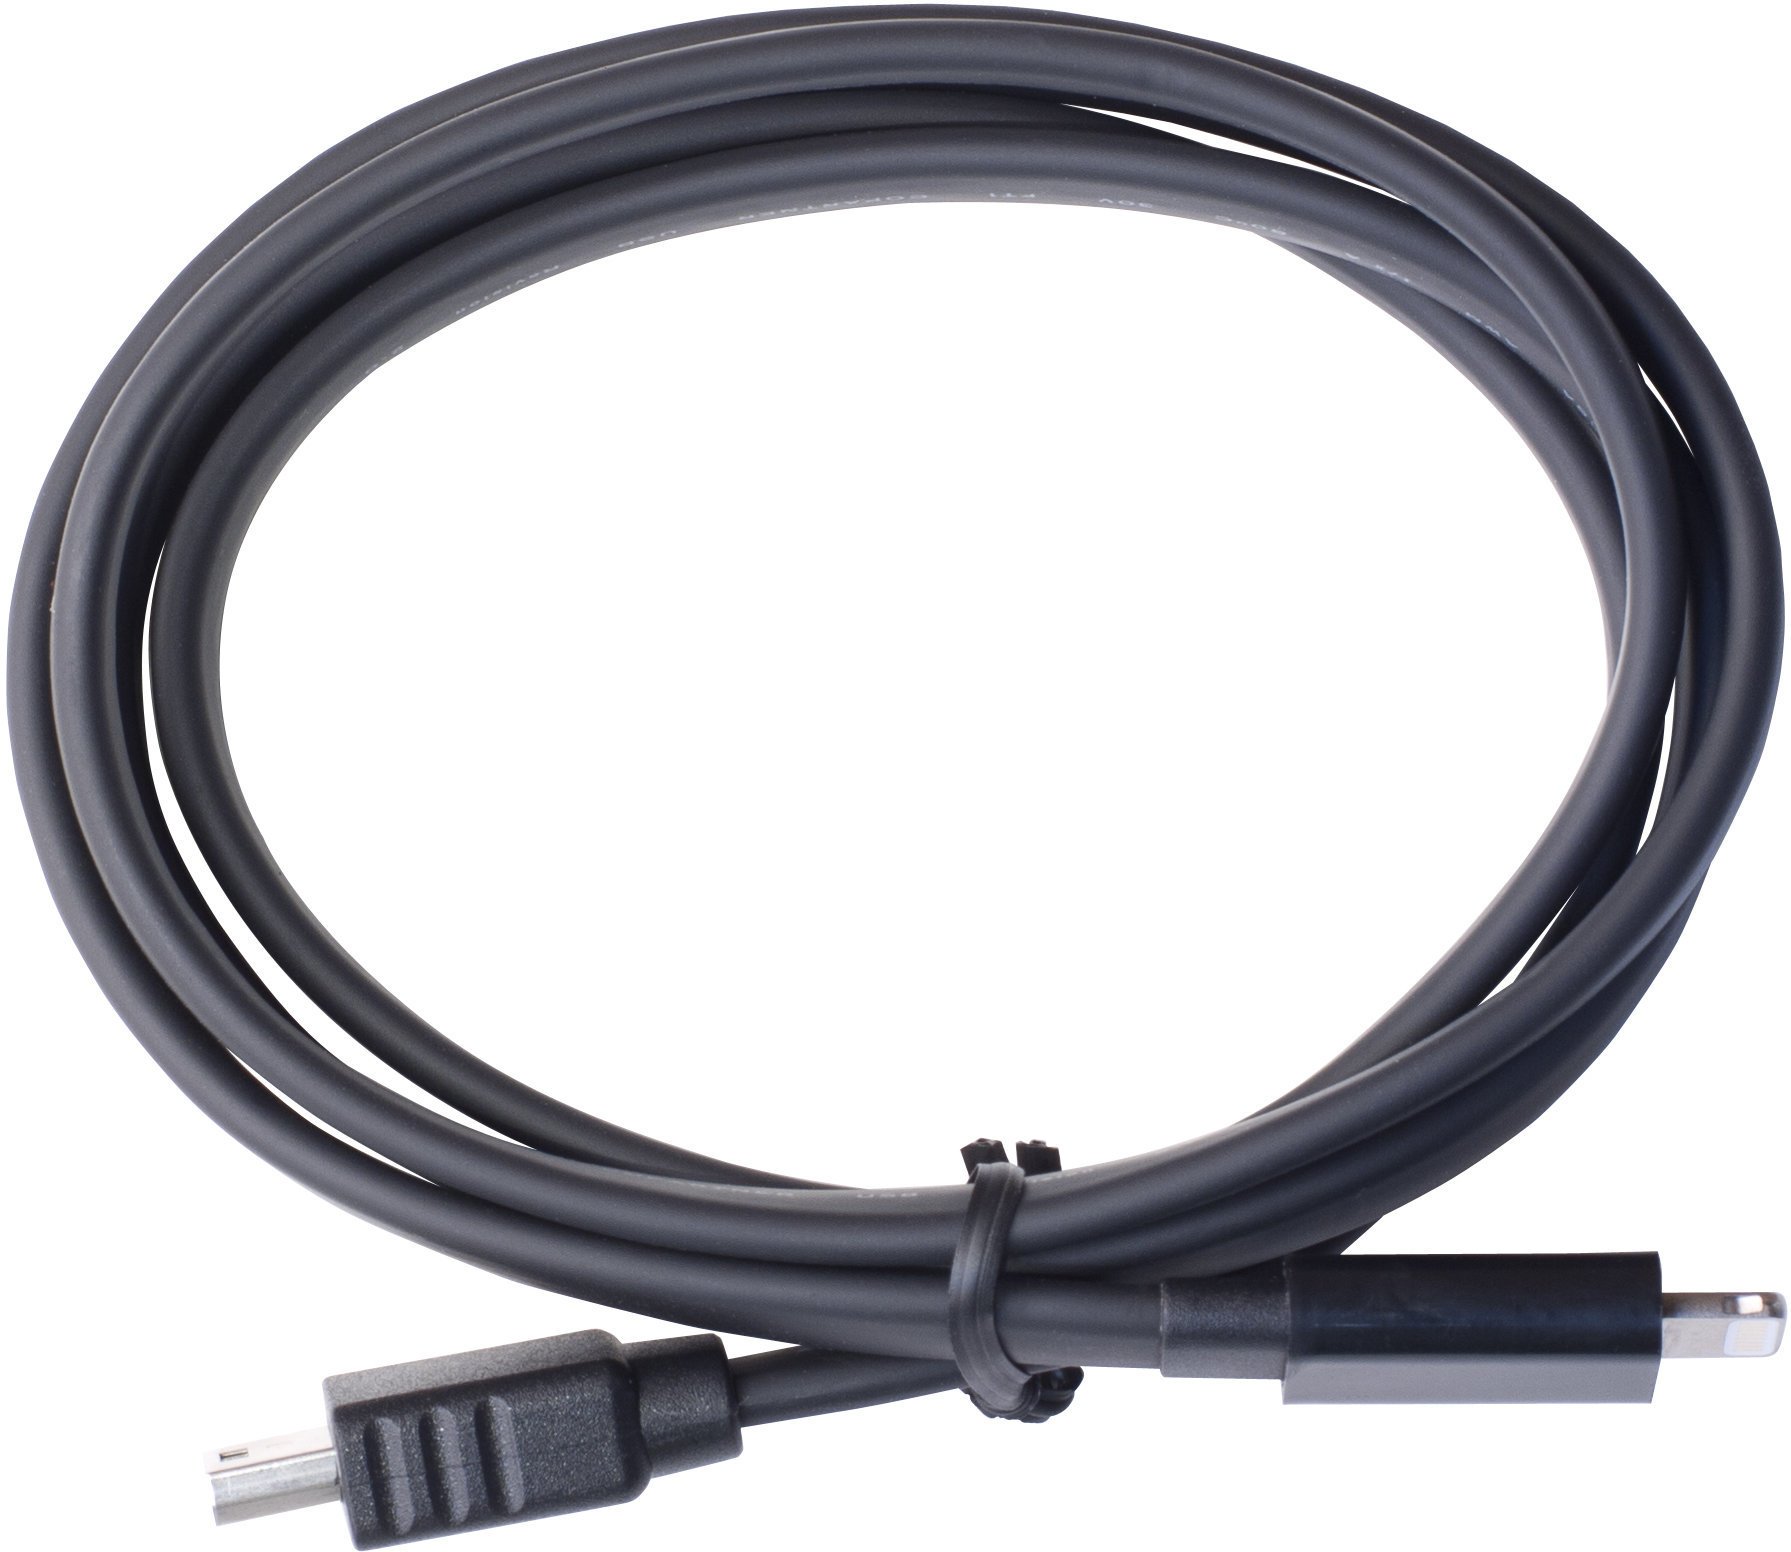 Speciális kábel Apogee iPad/iPhone Lgh Cable for Apogee ONE, Duet, and Quartet 100 cm Speciális kábel